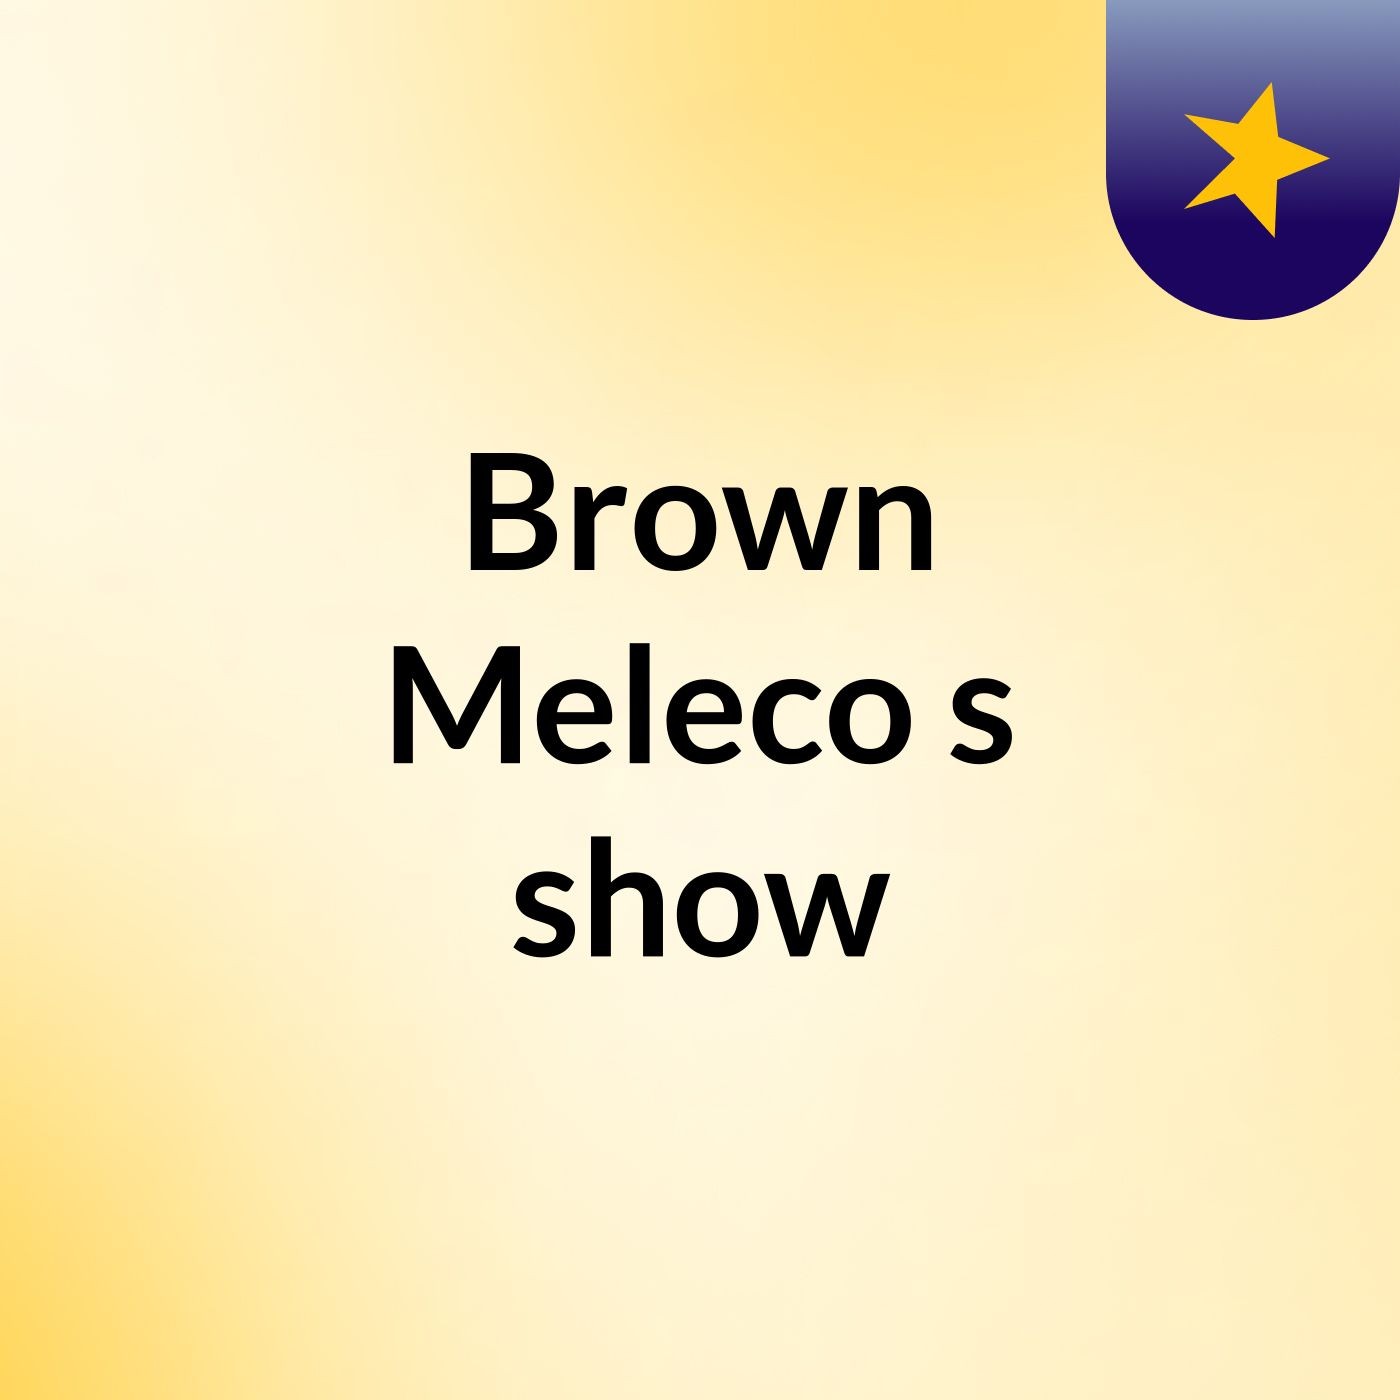 Brown Meleco's show